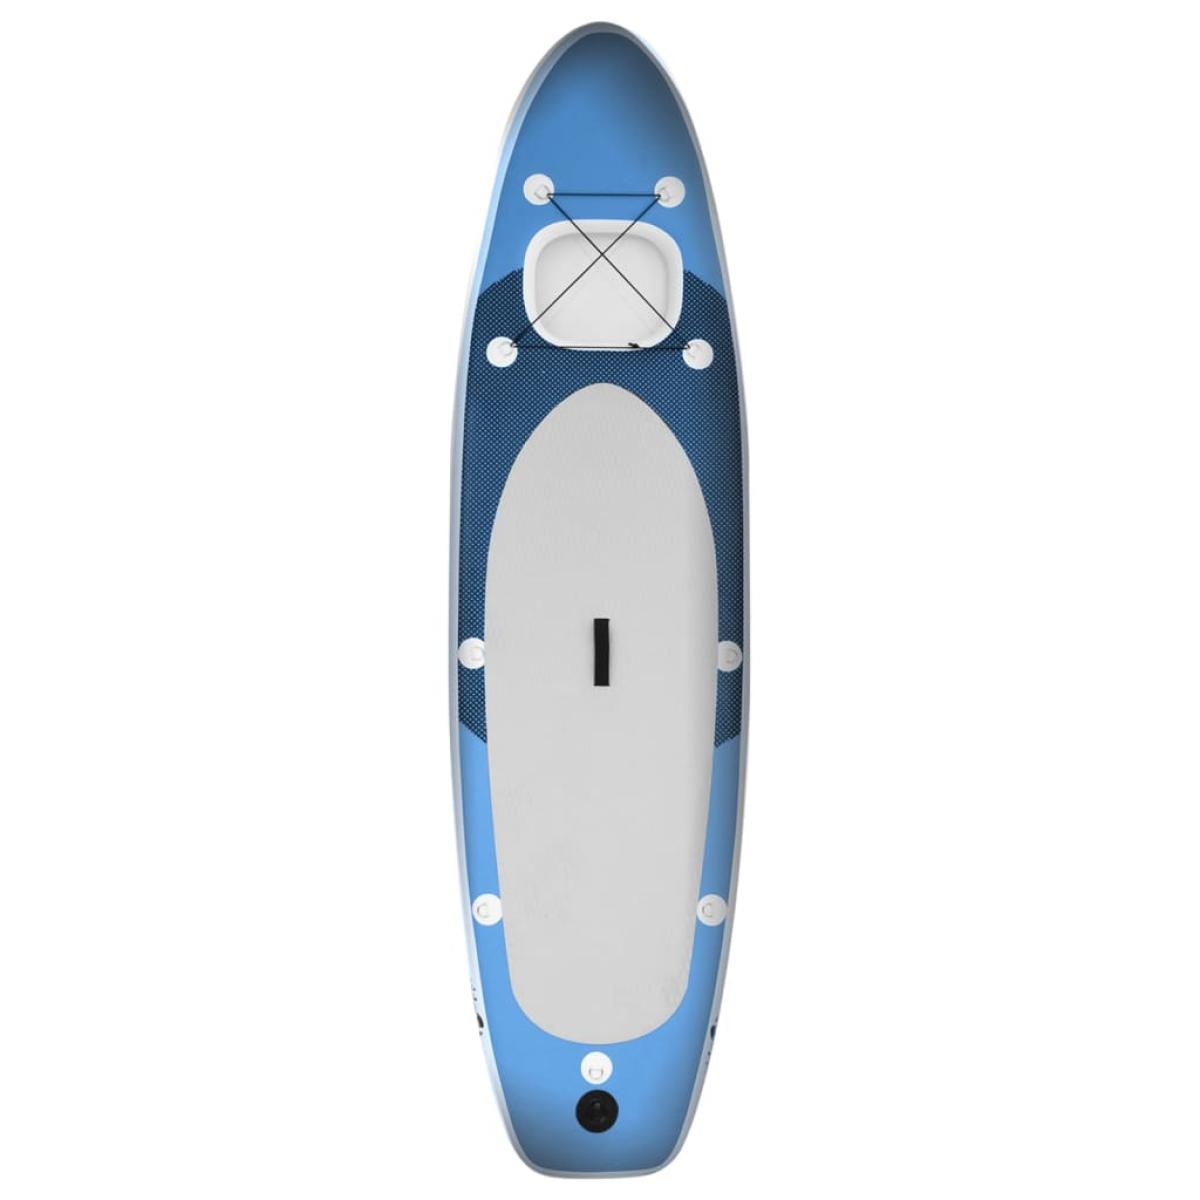 Set de tabla de paddle surf hinchable azul marino 360x81x10 cm